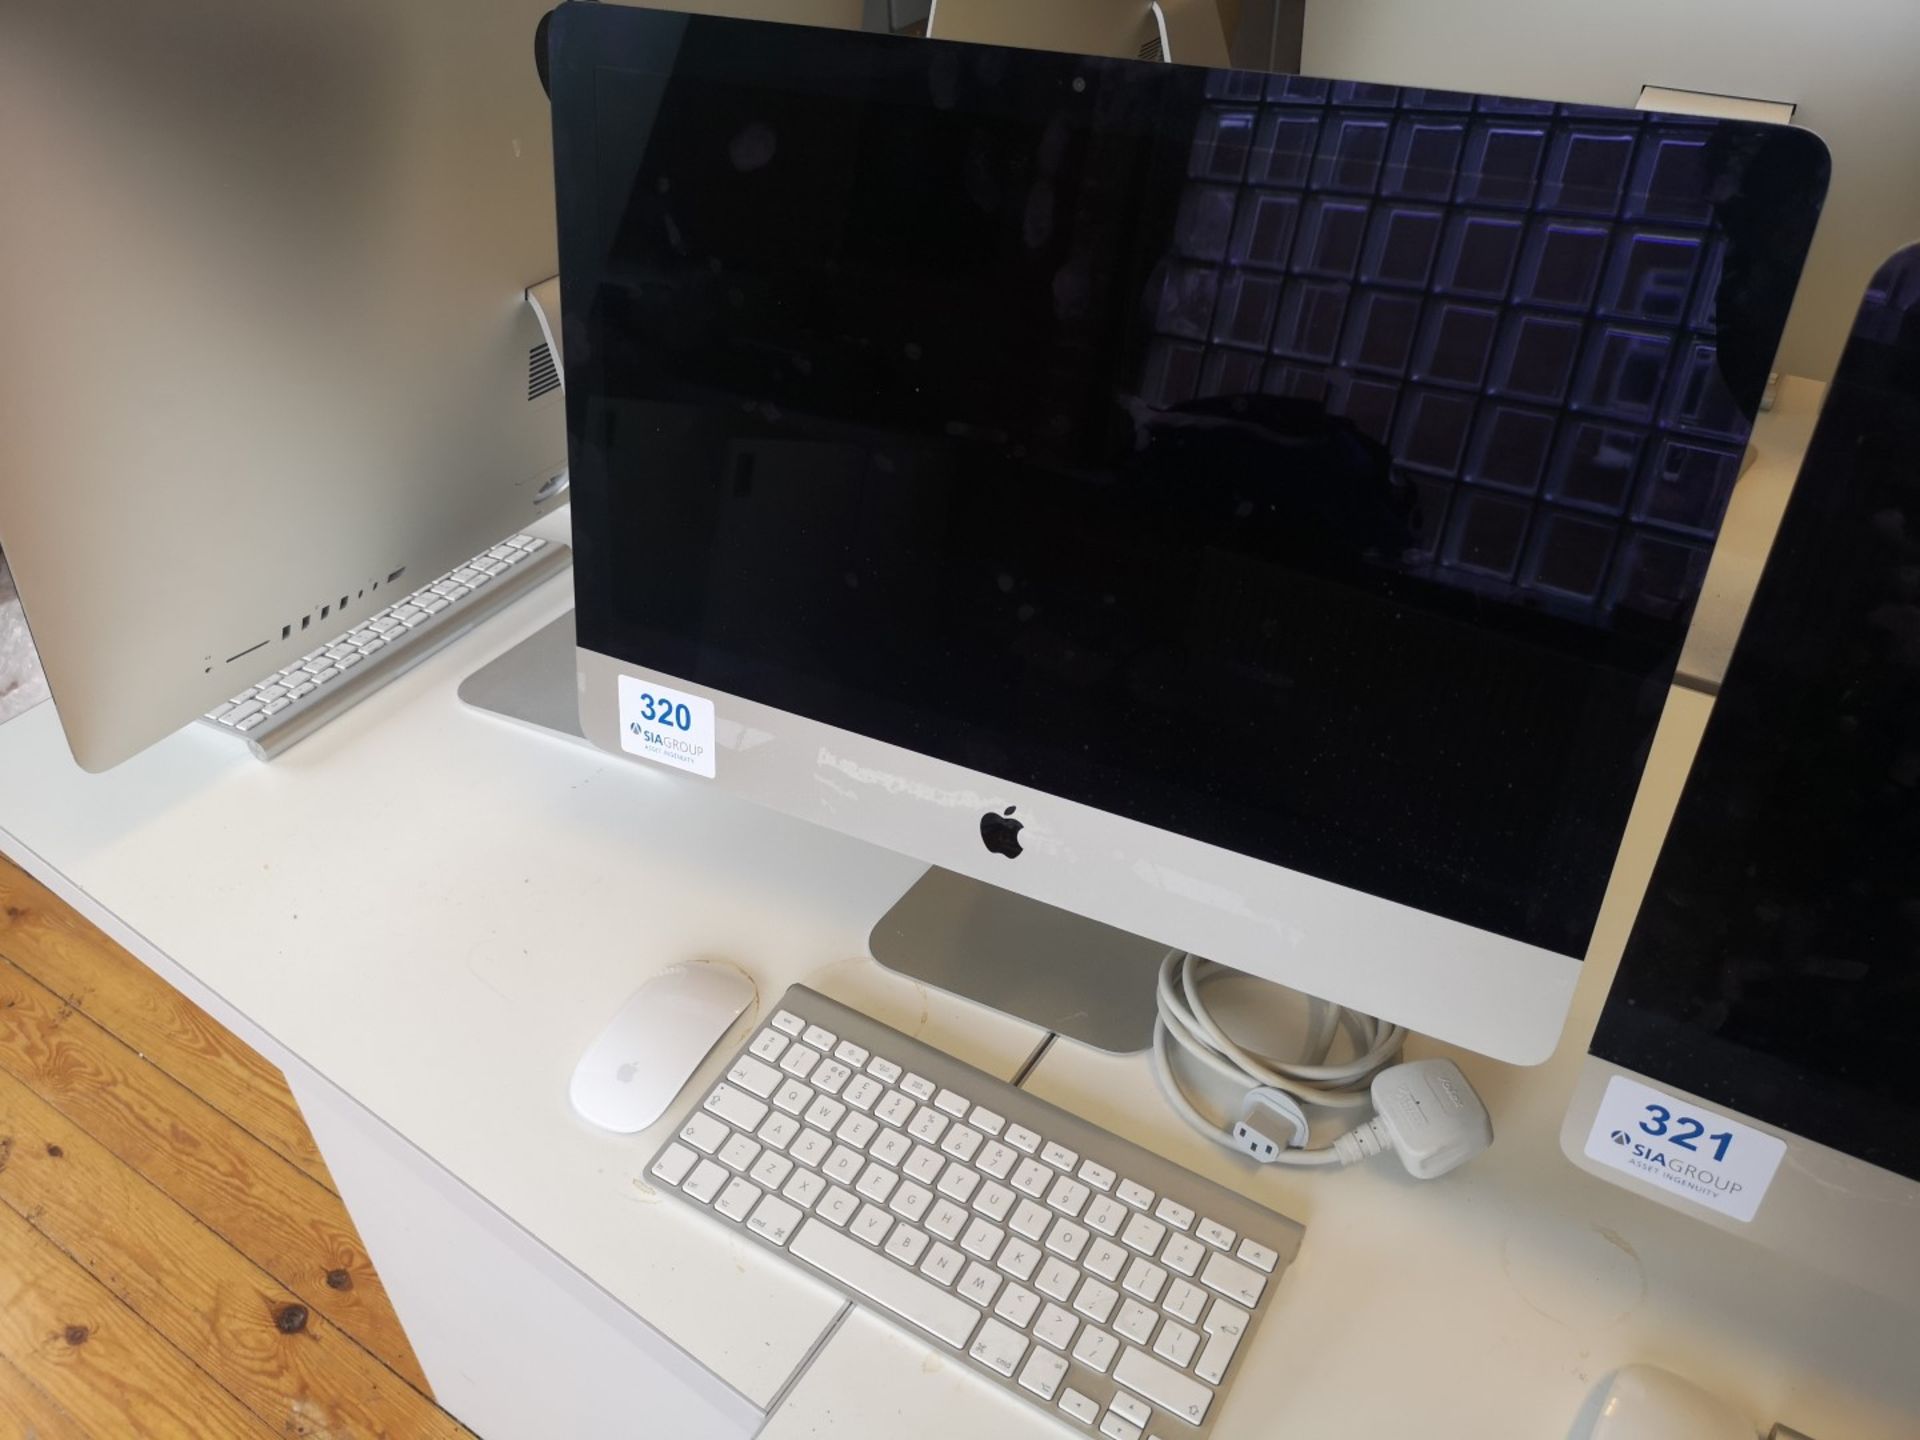 Apple iMac "Core i5" 2.7 21.5-Inch (Late 2012) - Image 2 of 2